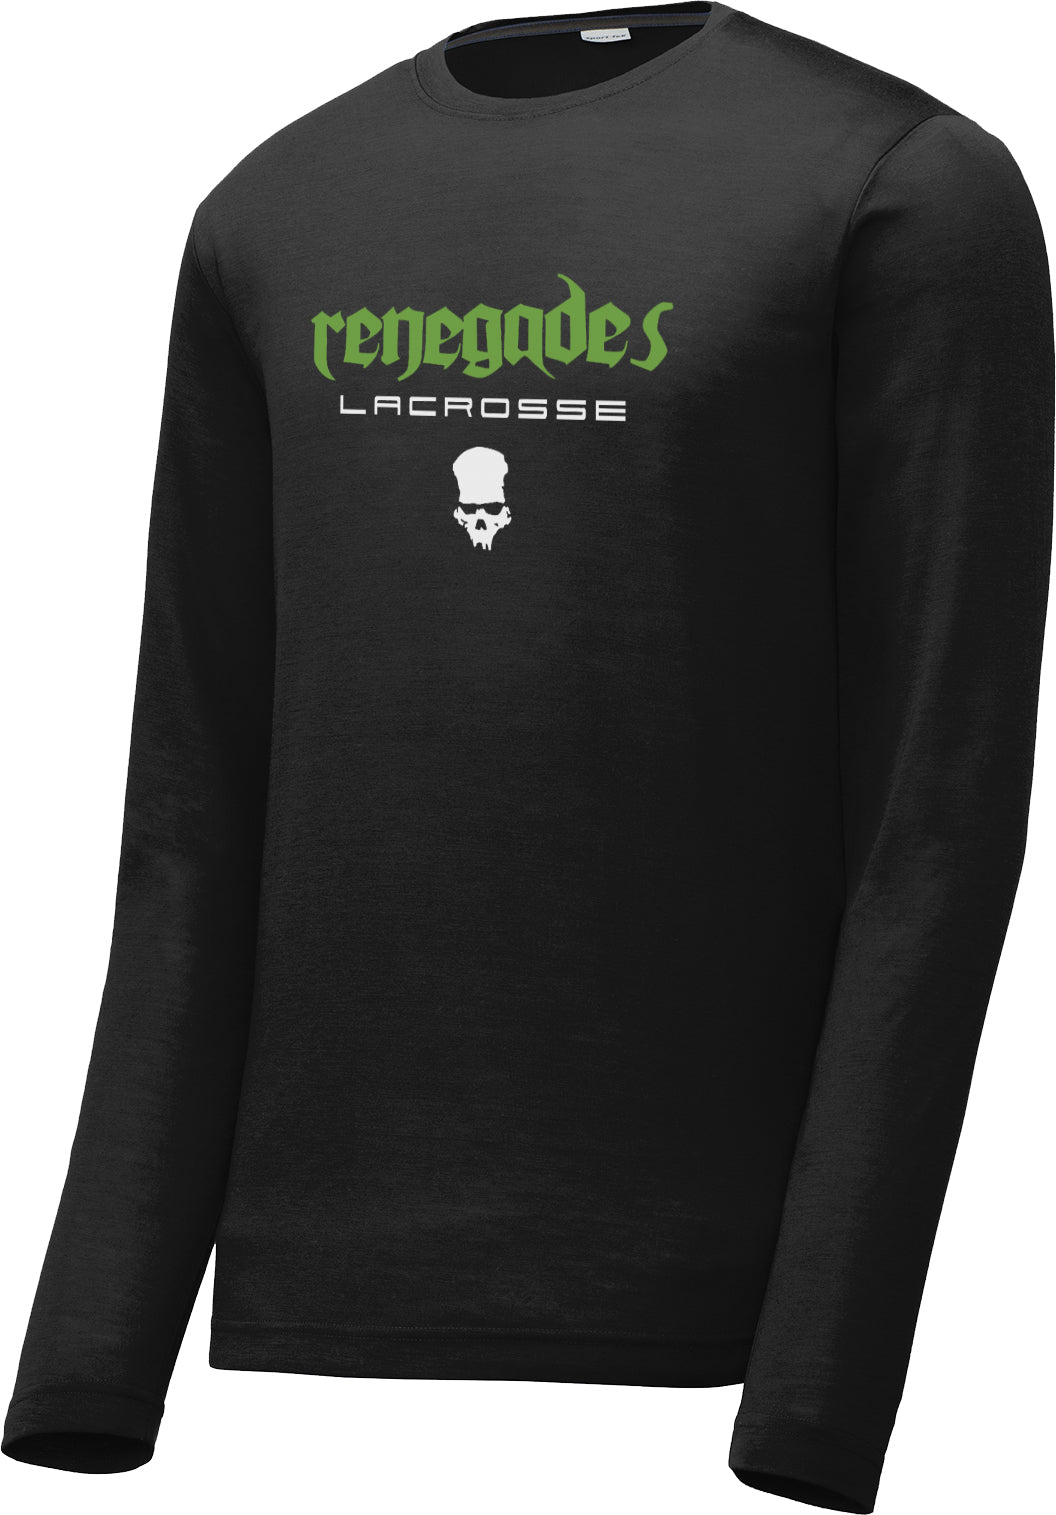 Renegades Lacrosse Black Long Sleeve CottonTouch Performance Shirt